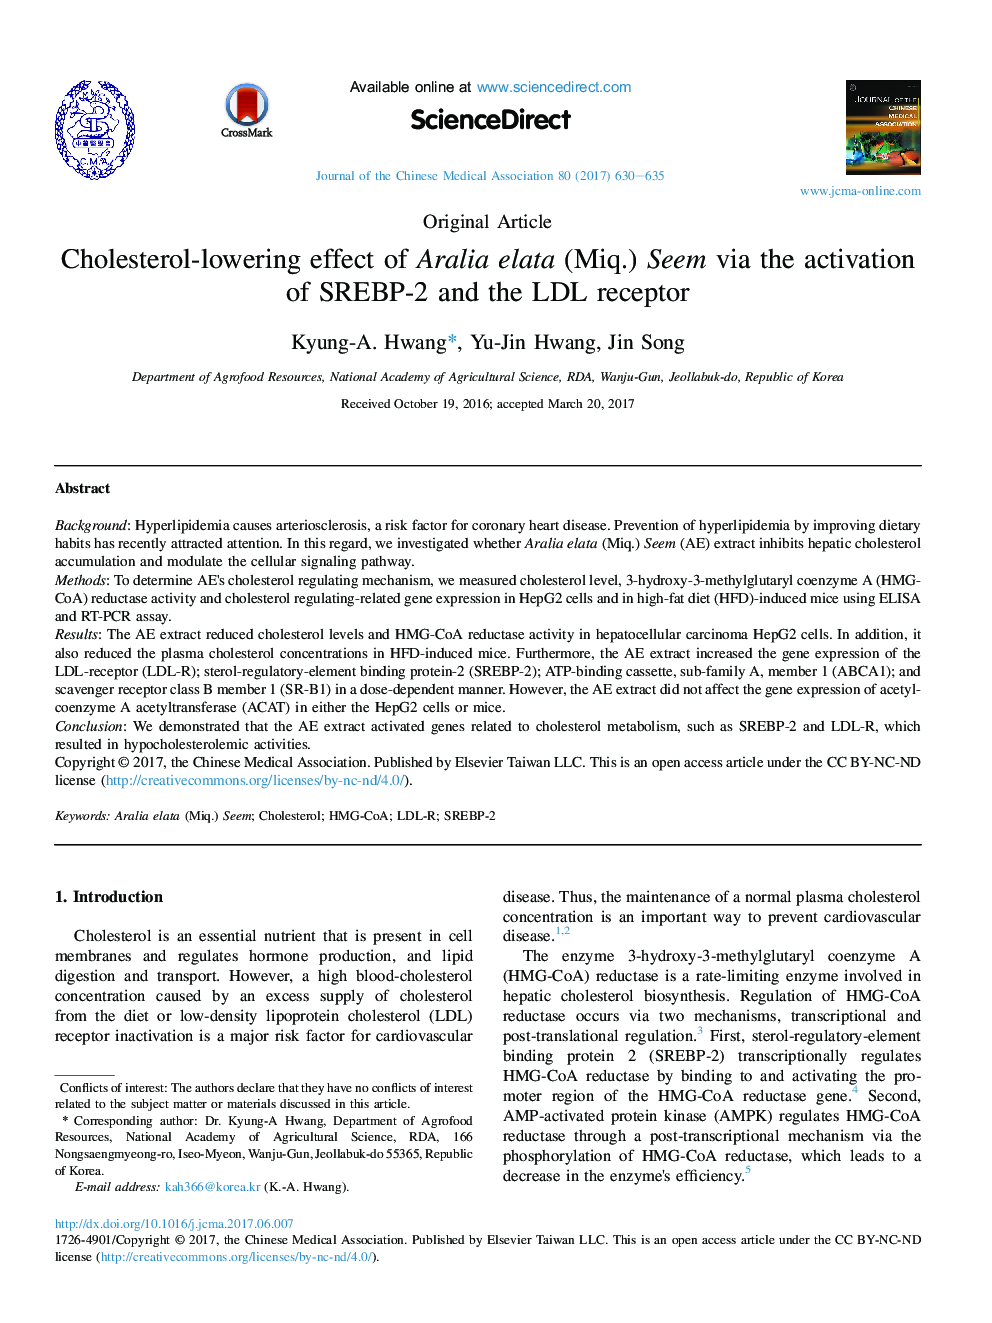 Cholesterol-lowering effect of Aralia elata (Miq.) Seem via the activation of SREBP-2 and the LDL receptor